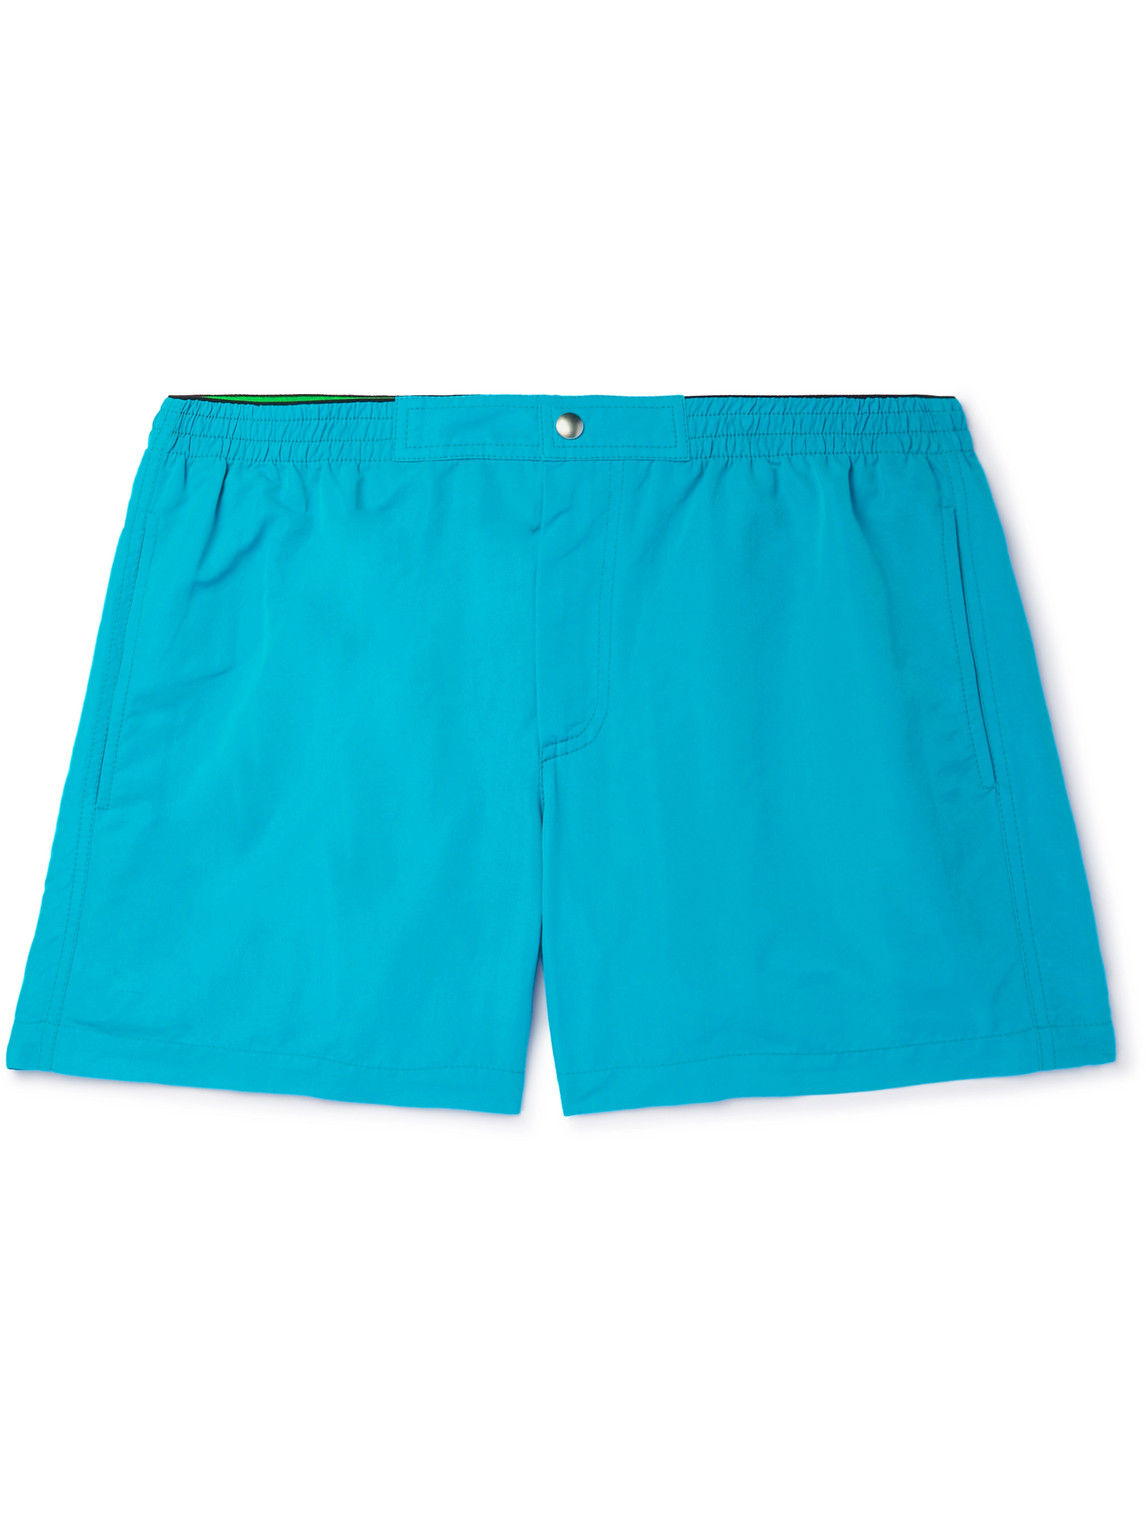 Bottega Veneta - Short-Length Tech-Faille Swim Shorts - Men - Blue - L von Bottega Veneta